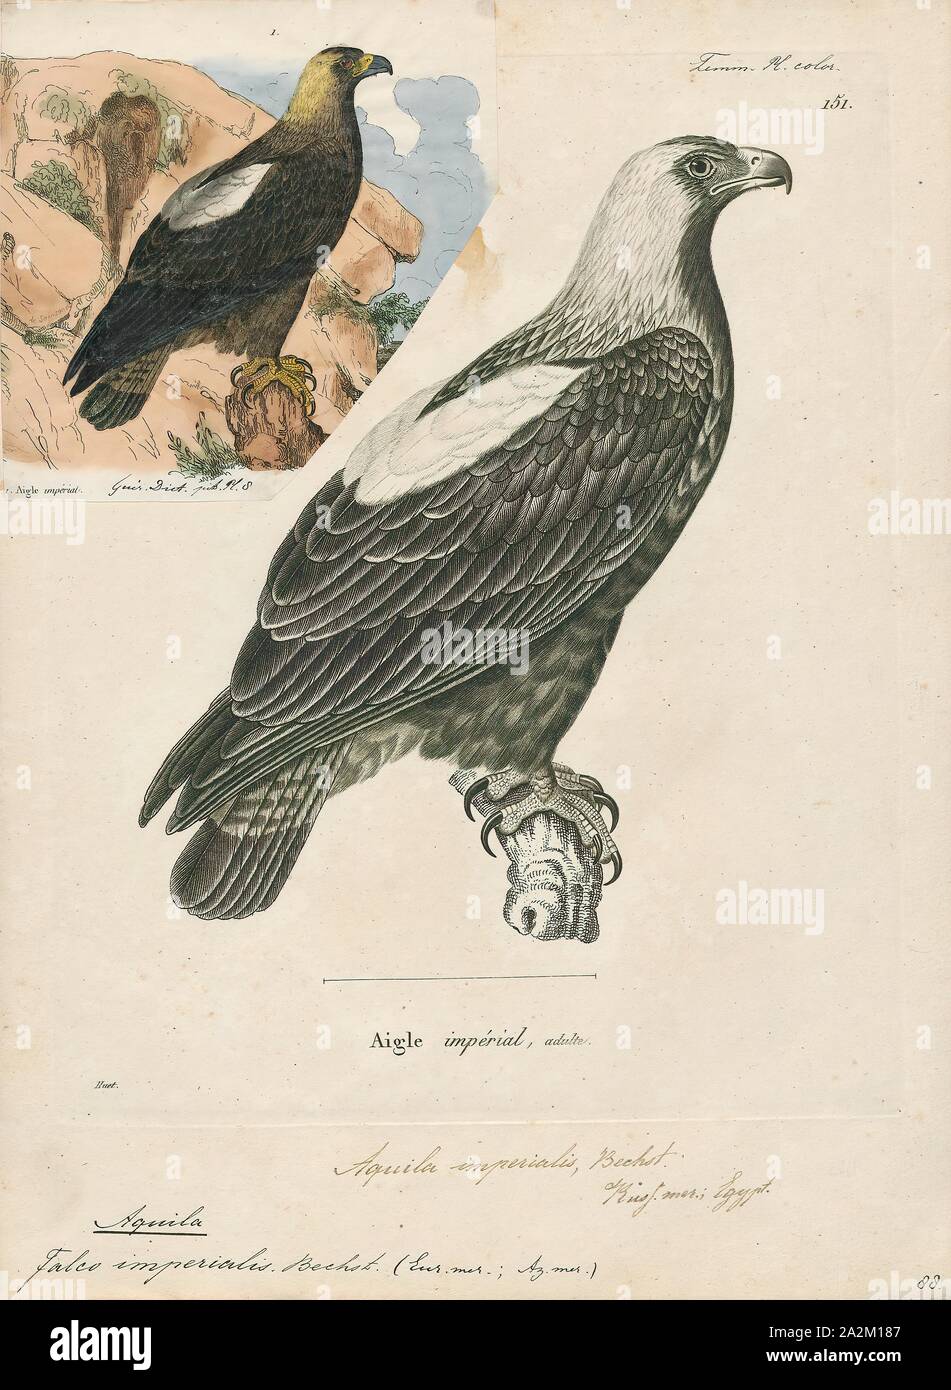 Aquila imperialis, Print, 1700-1880 Stock Photo